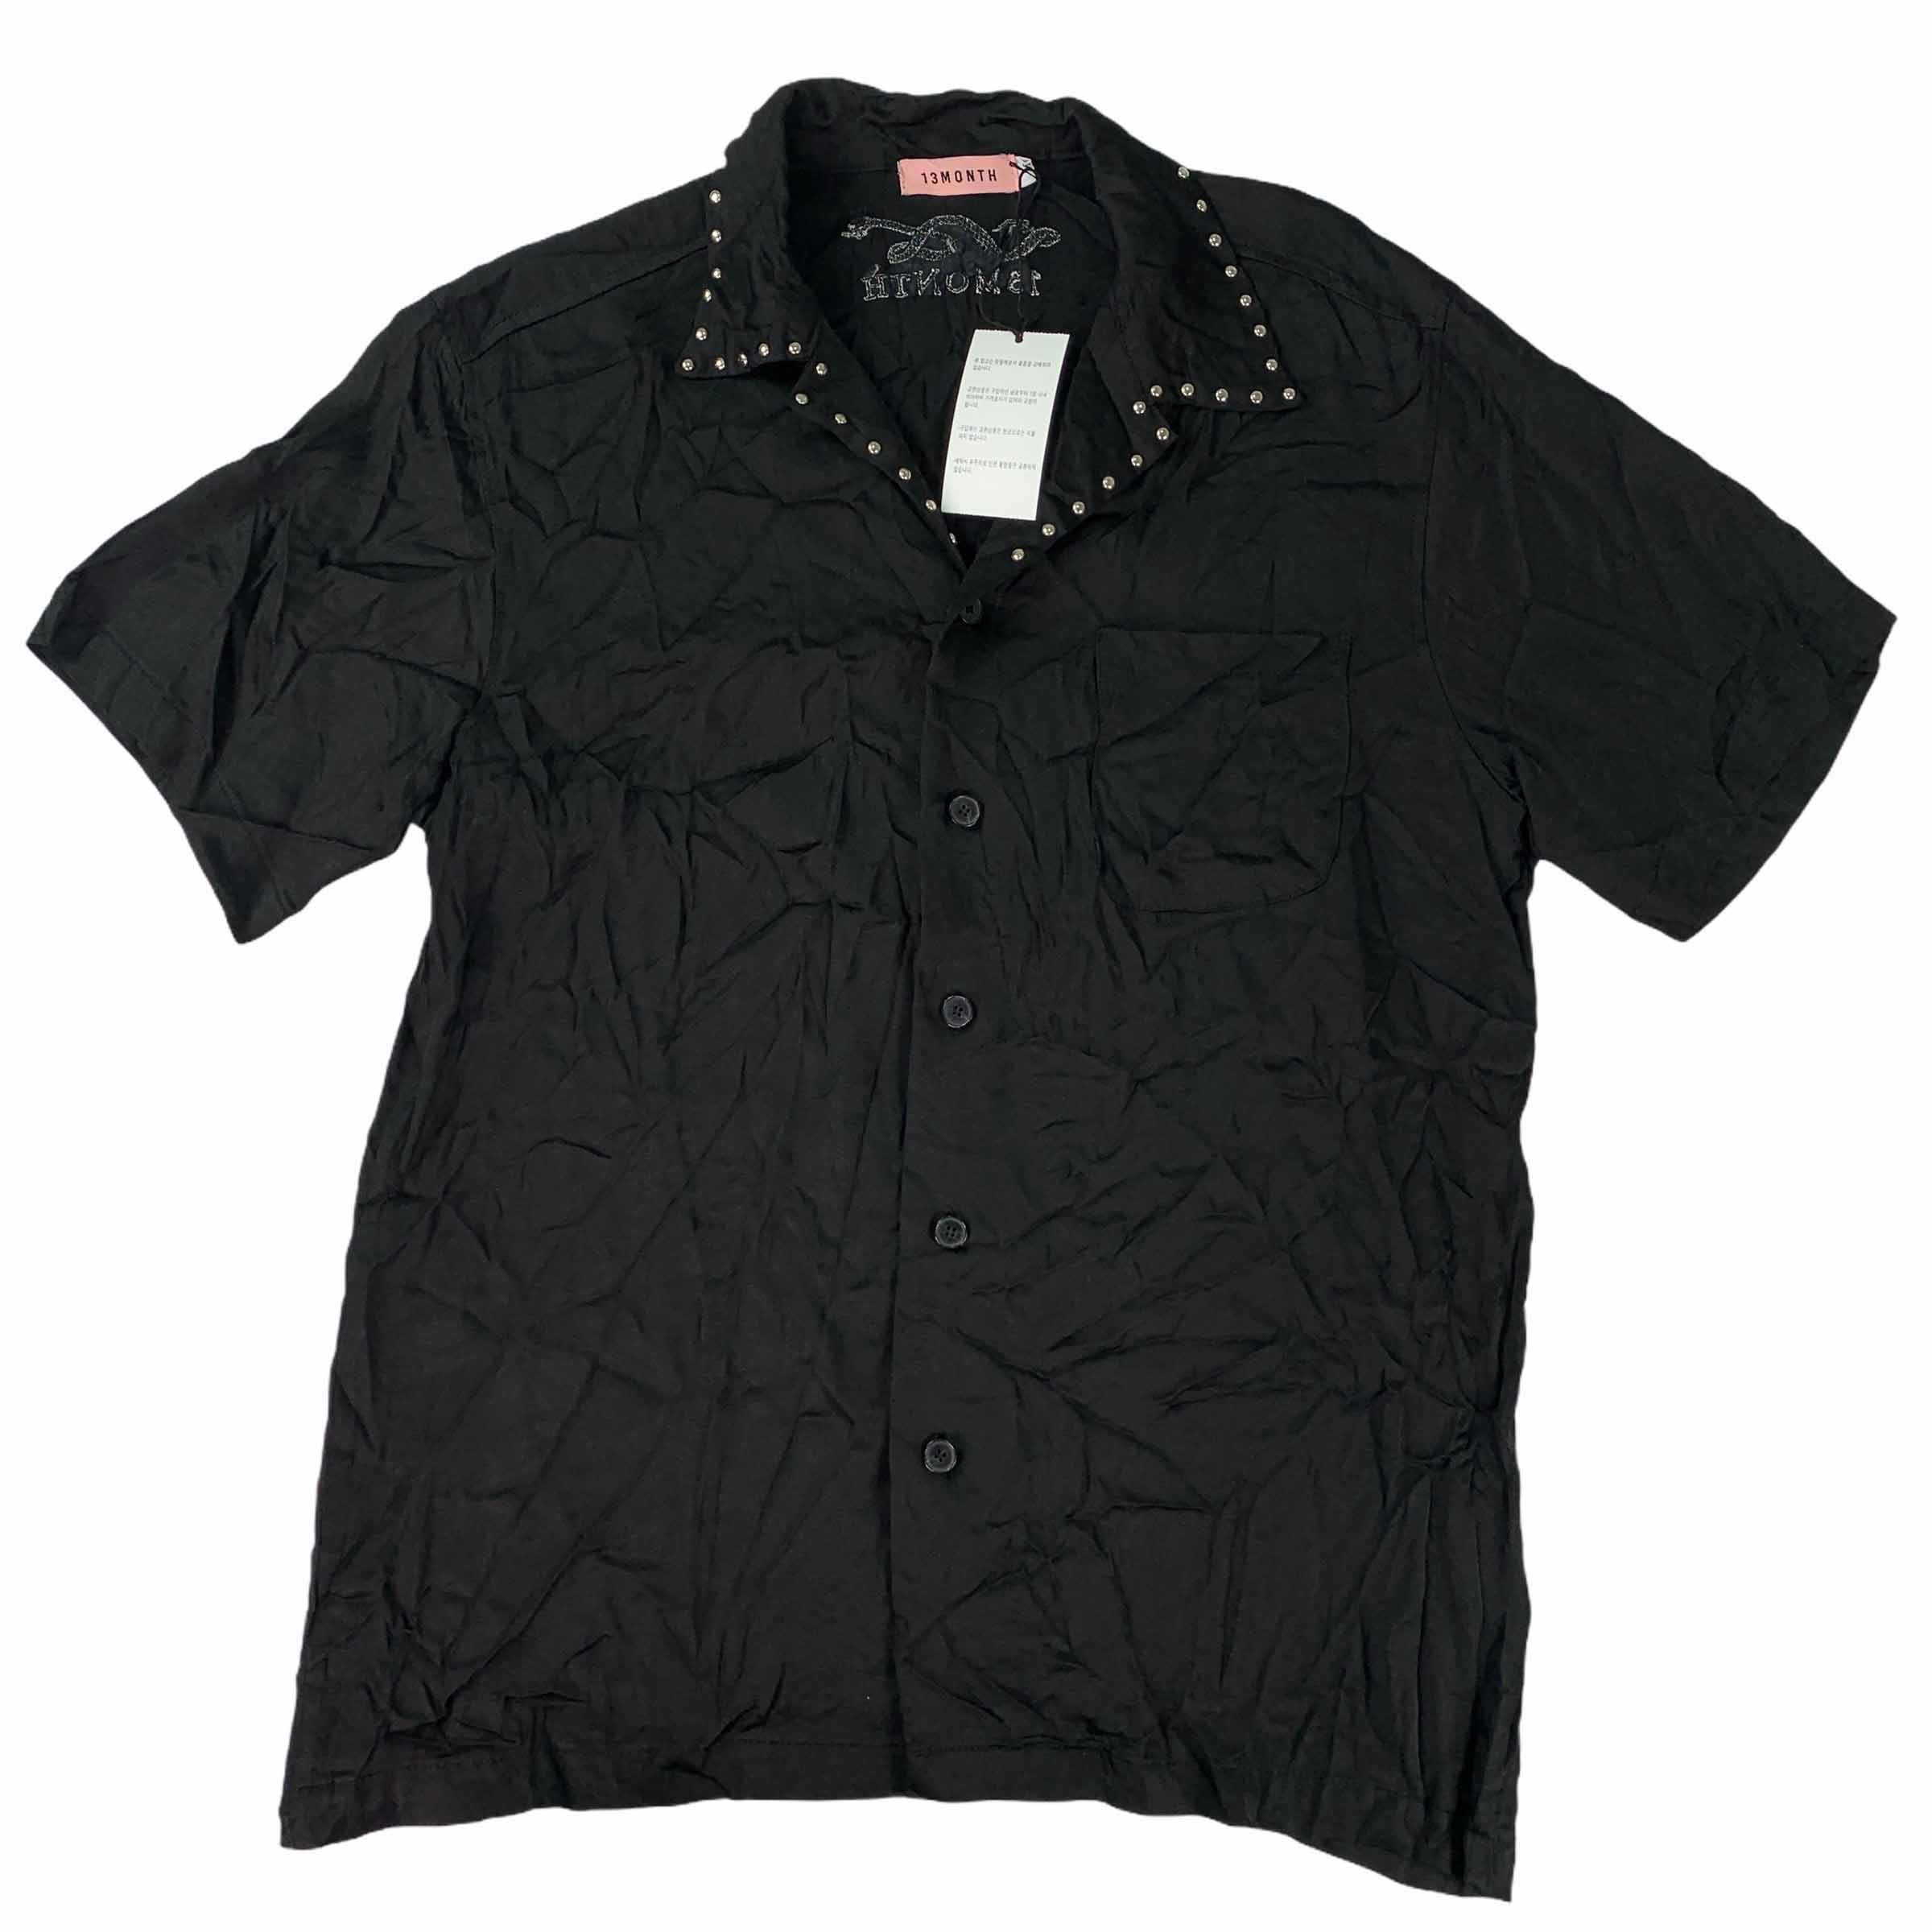 [13month] Rayon Stud Short Sleeve Shirt BK - Size S